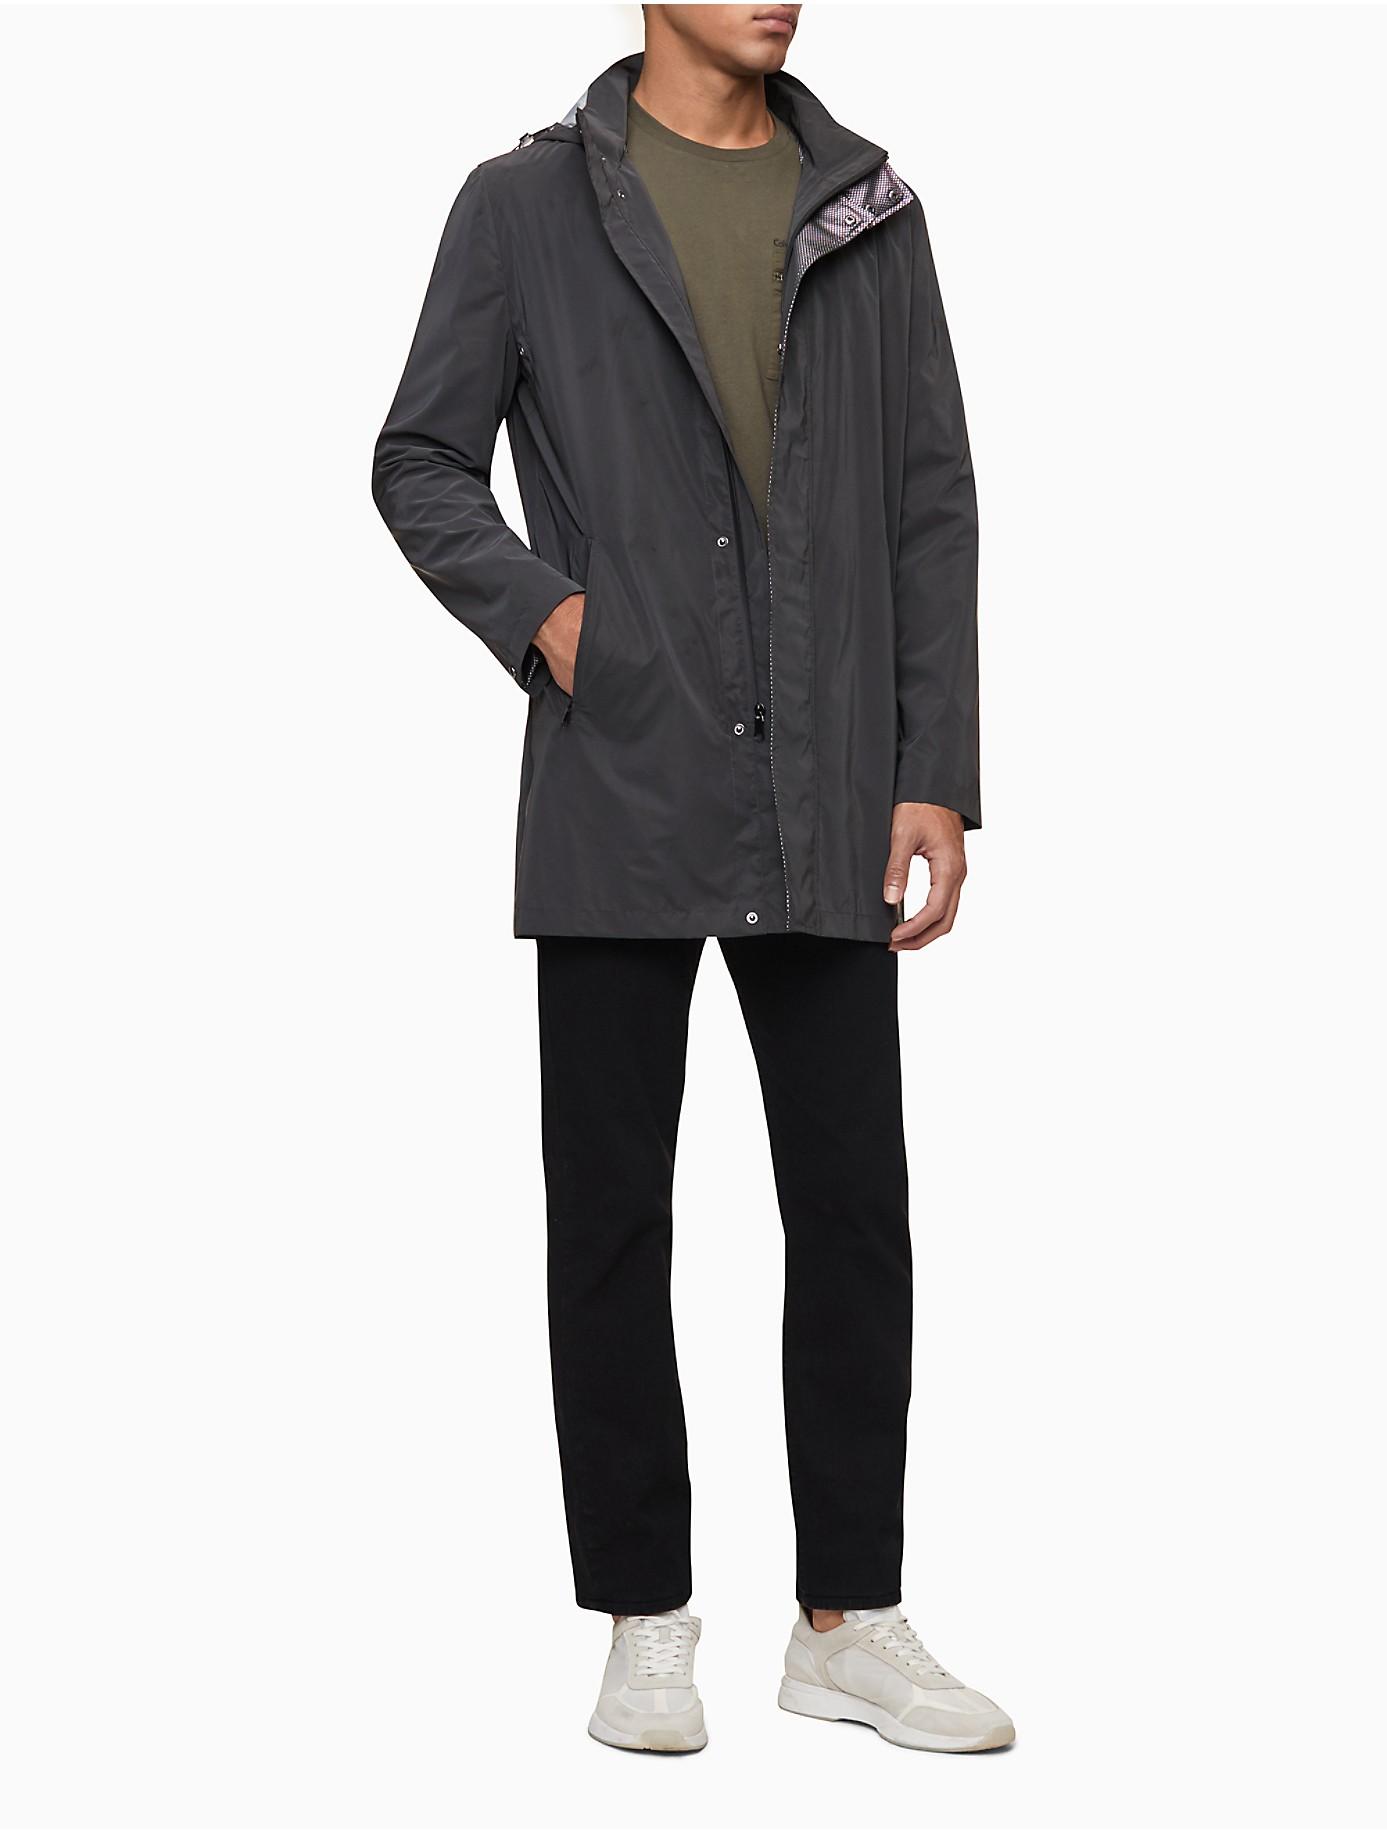 Calvin Klein Synthetic Reflective Zip Hooded Jacket in Black for Men - Lyst